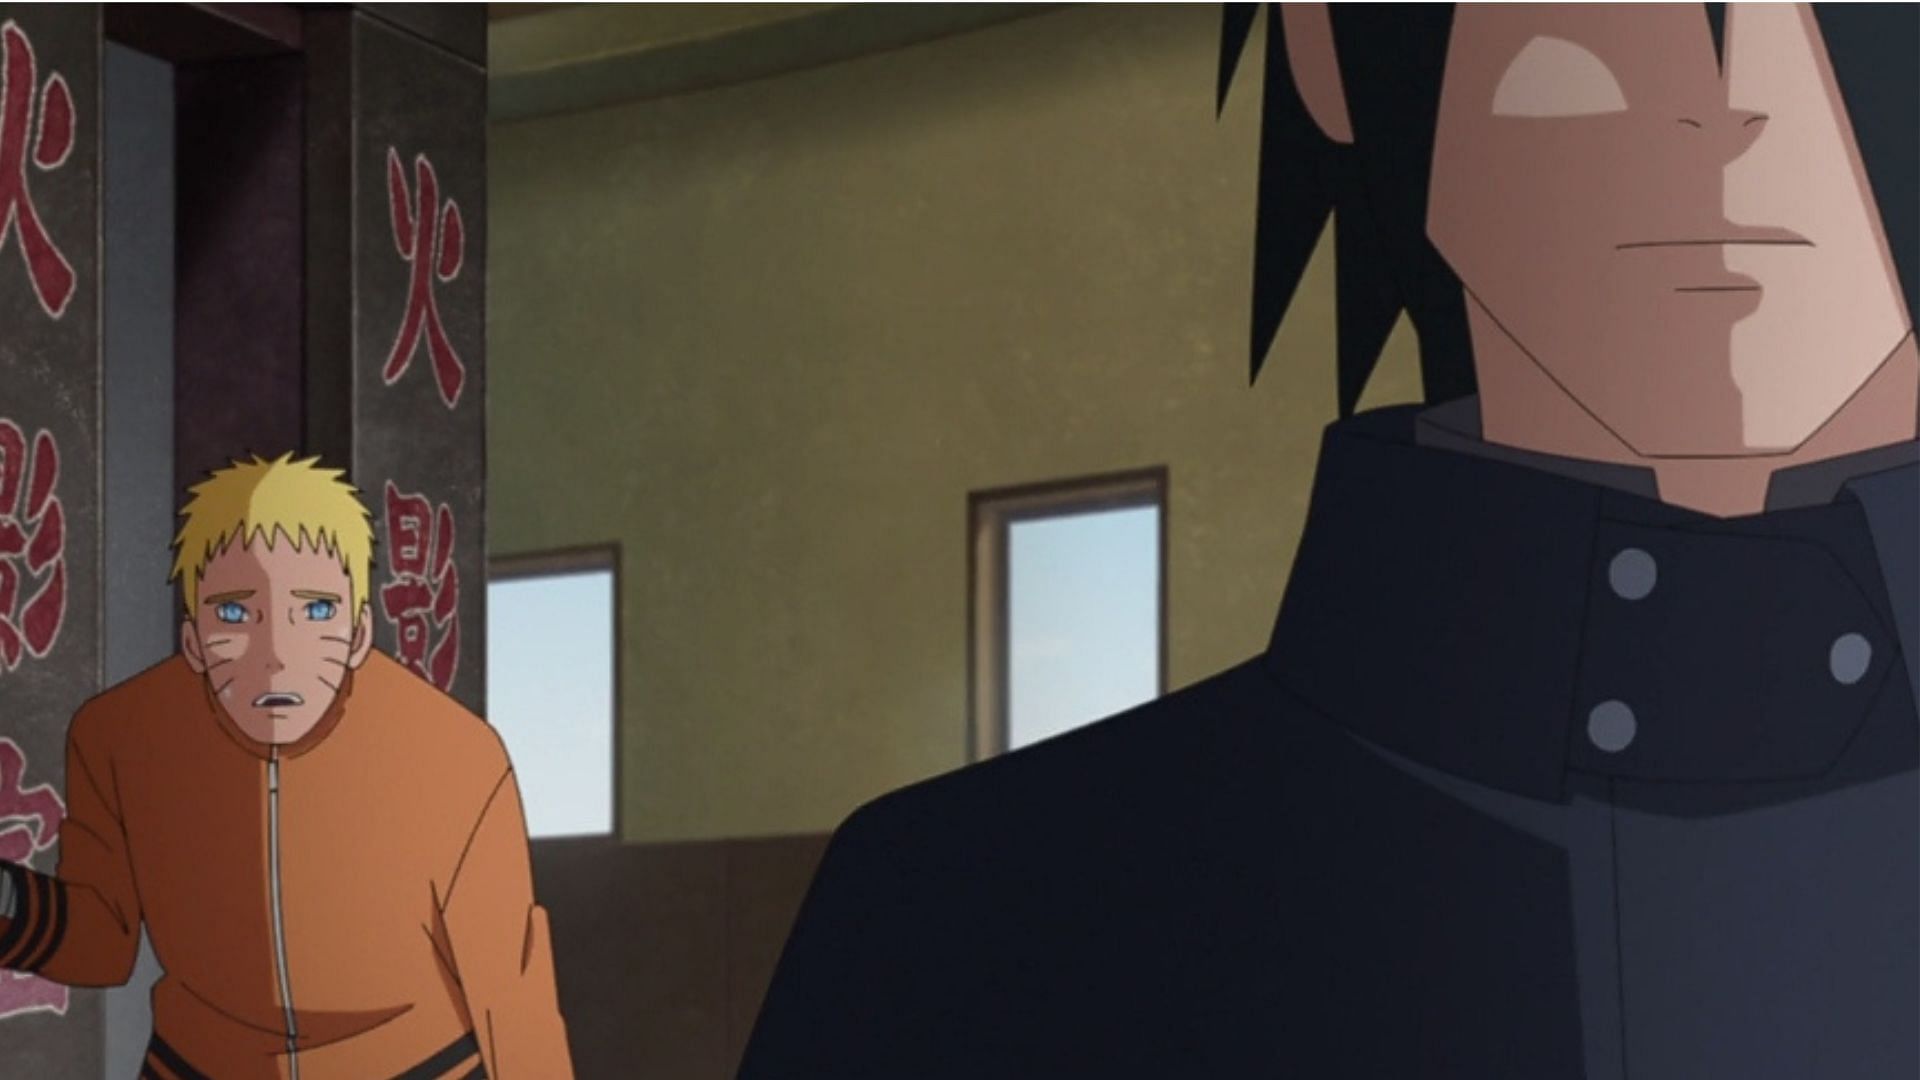 Sasuke and Naruto as seen in the Boruto anime (Image via Studio Pierrot)